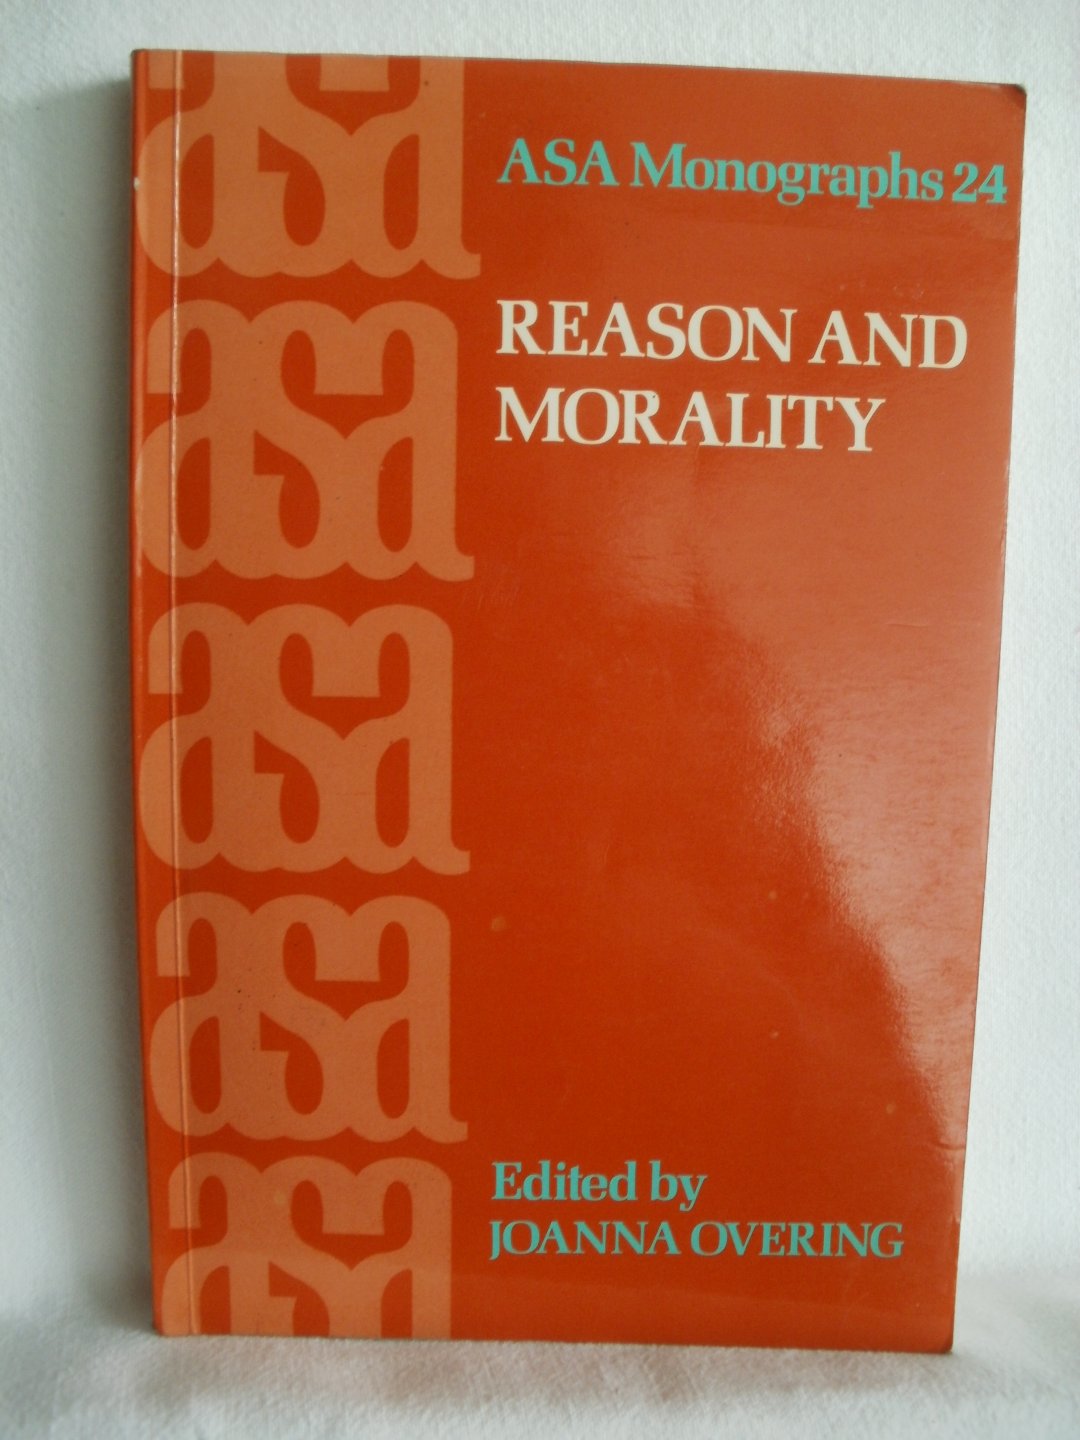 Overing, Johanna (ed.) - Reason and Morality. ASA Monograph no. 24